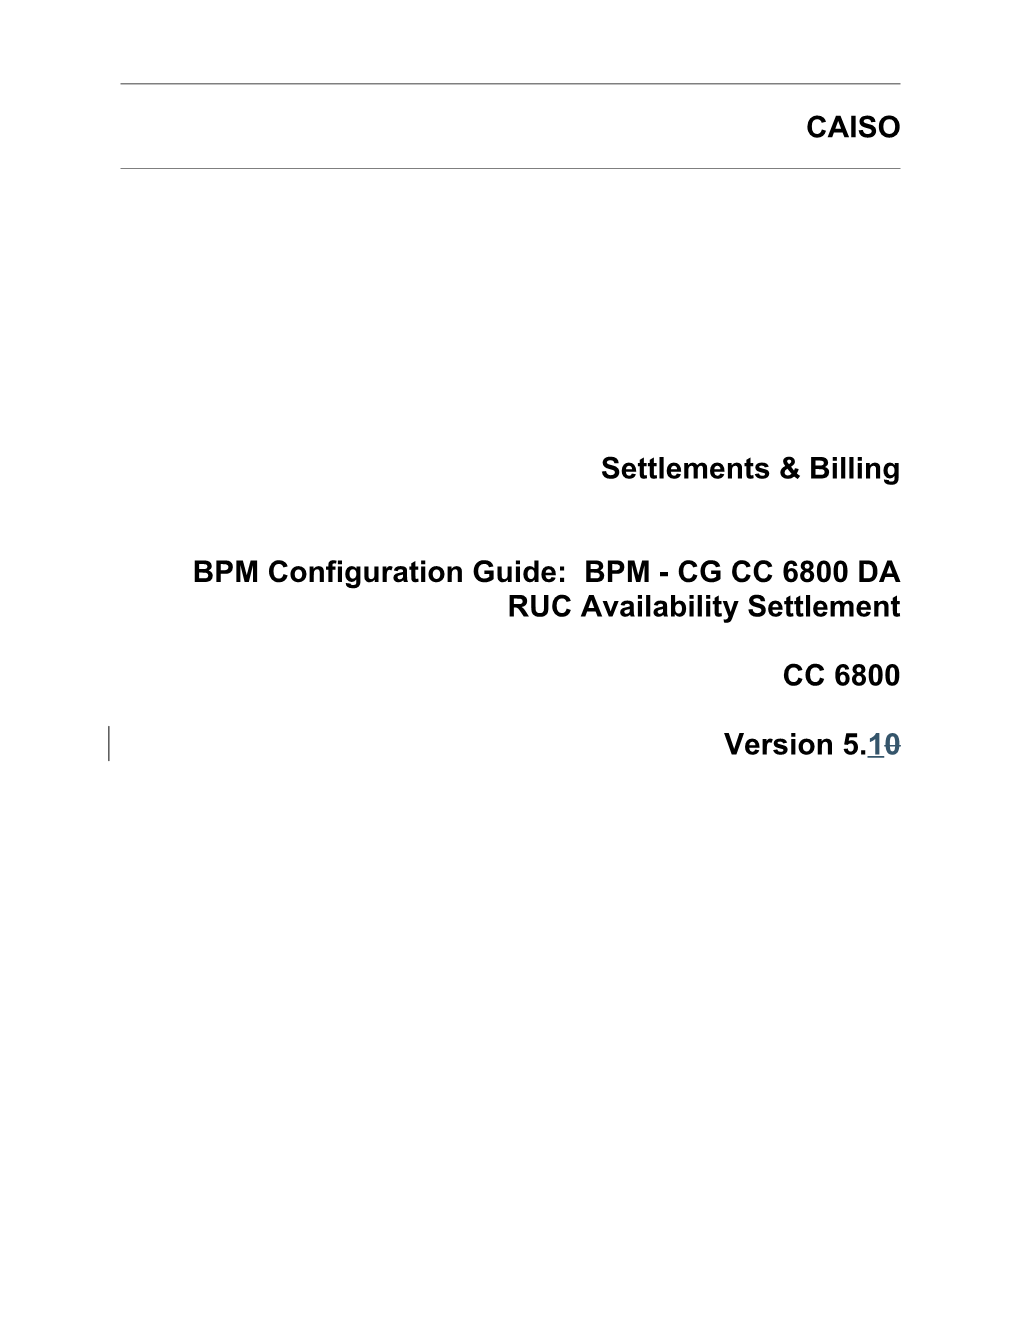 BPM - CG CC 6800 DA RUC Availability Settlement